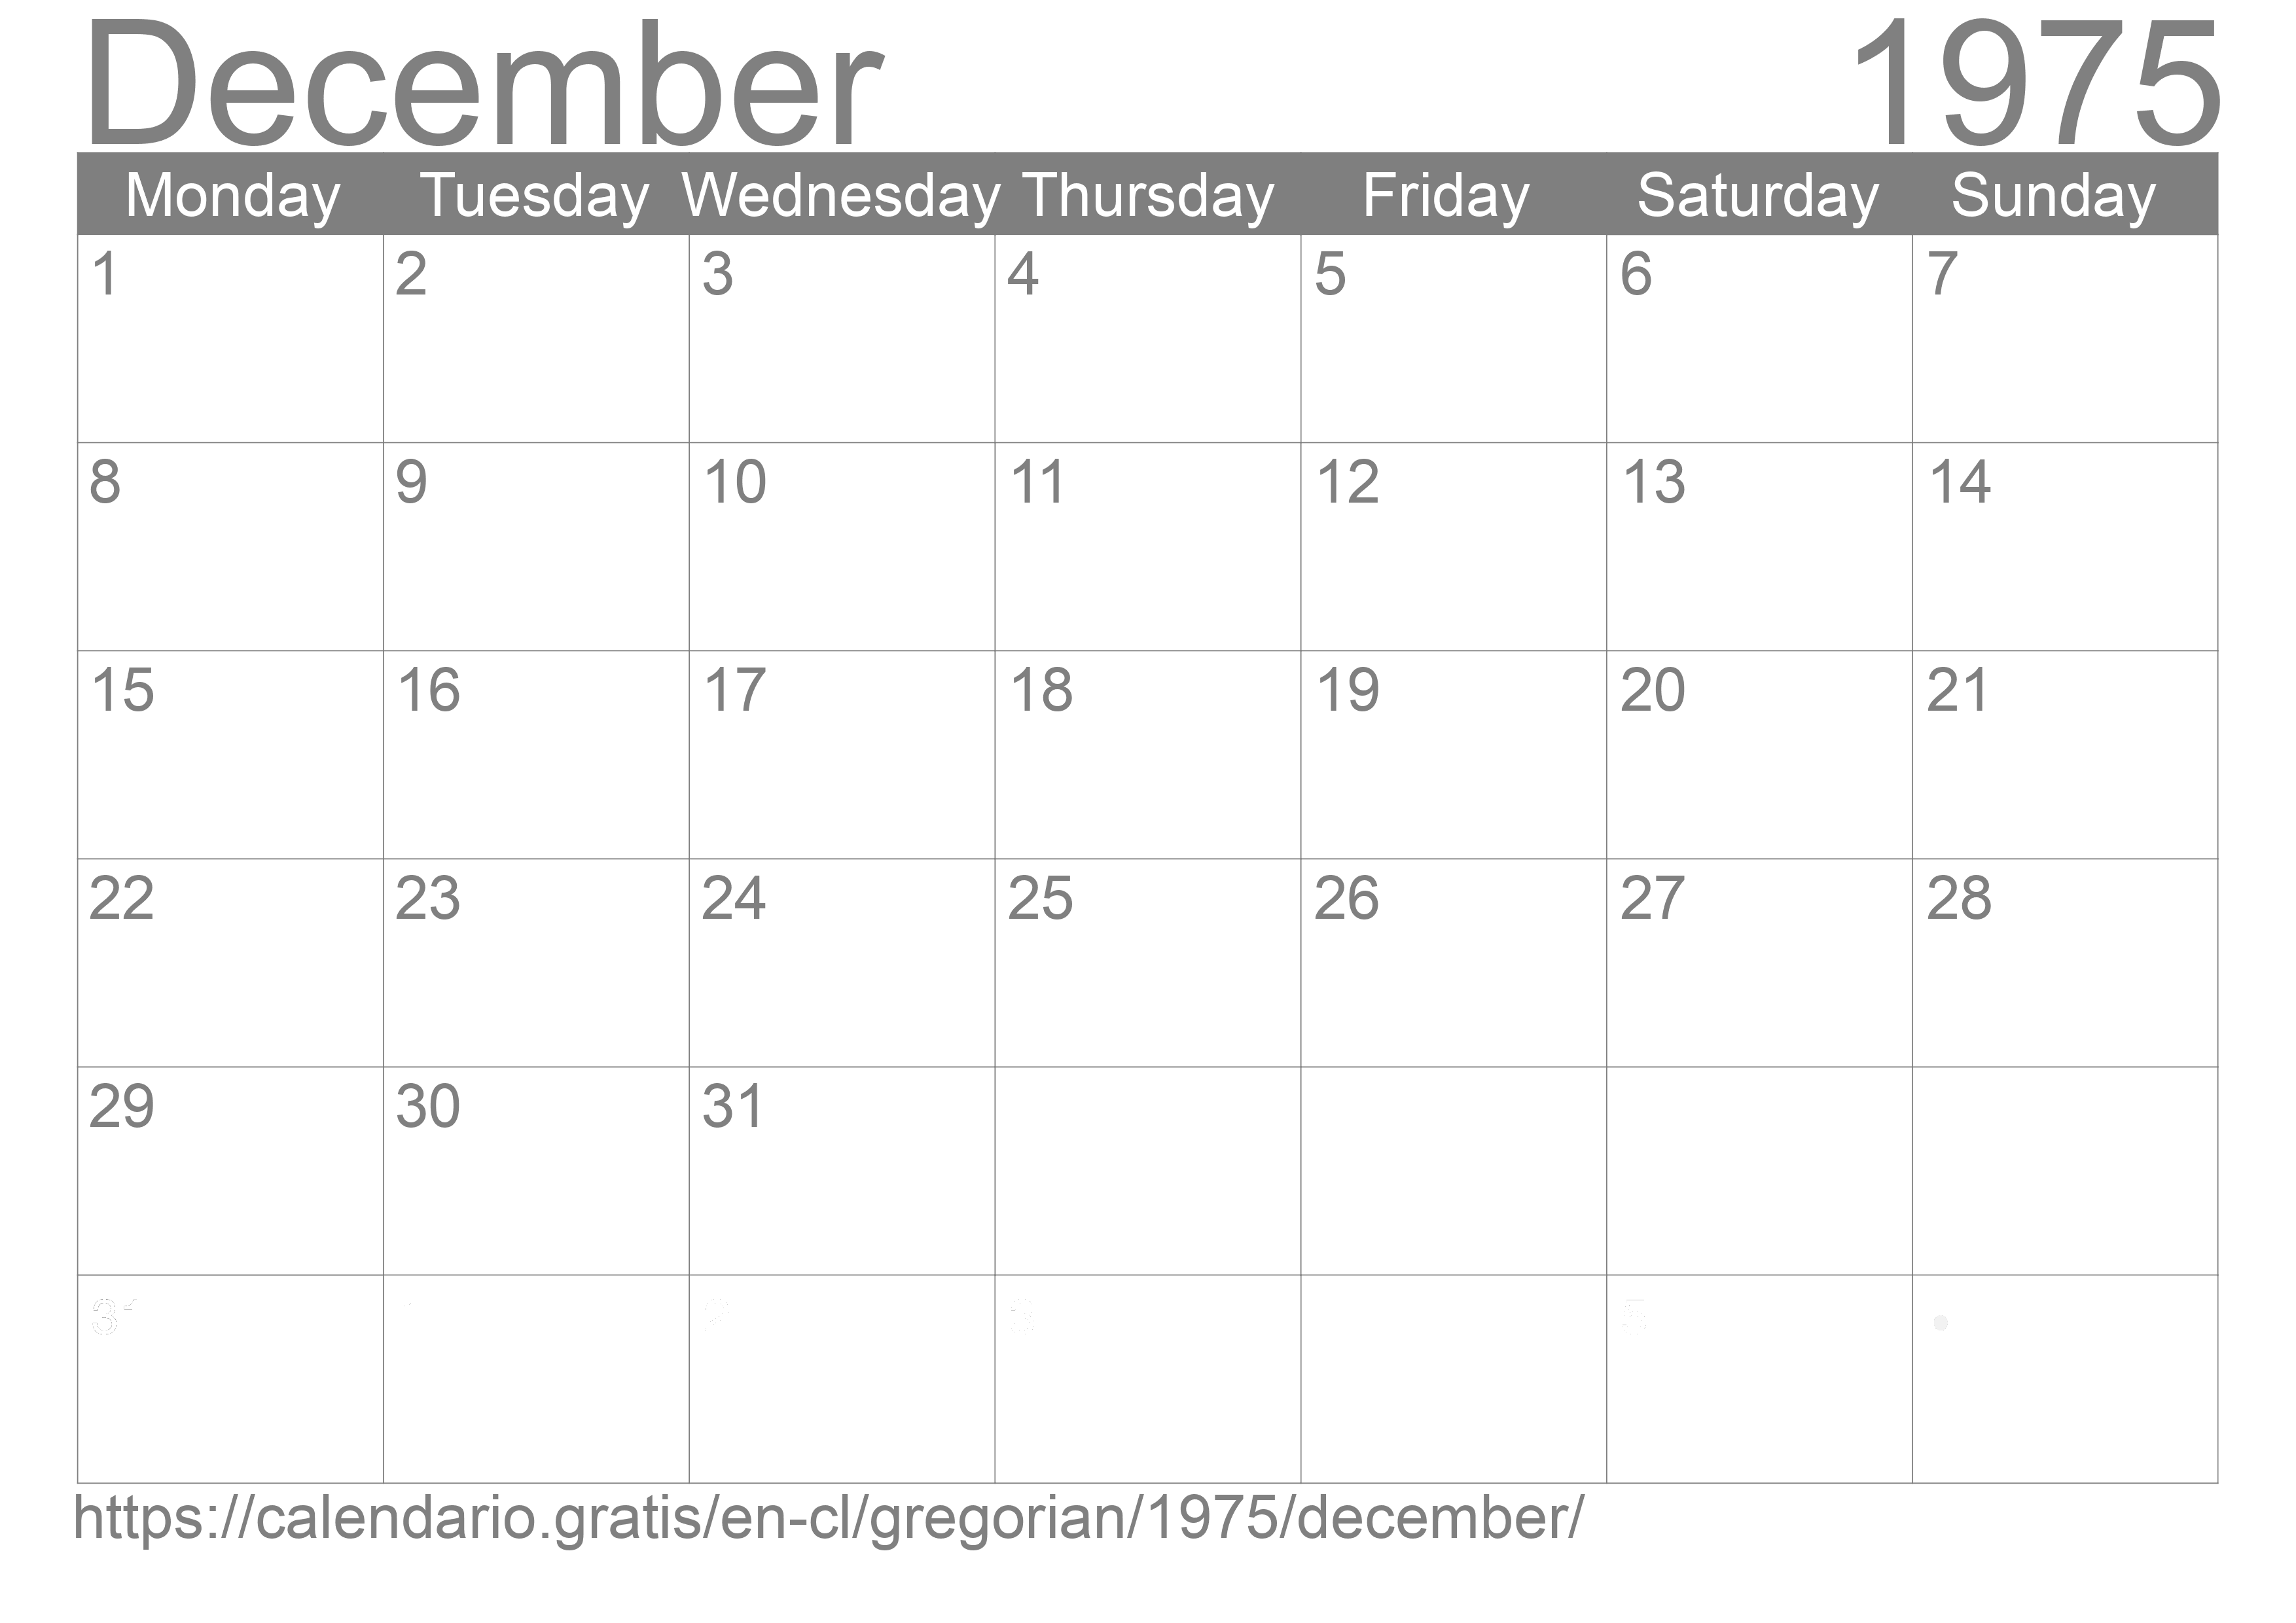 Calendar December 1975 to print